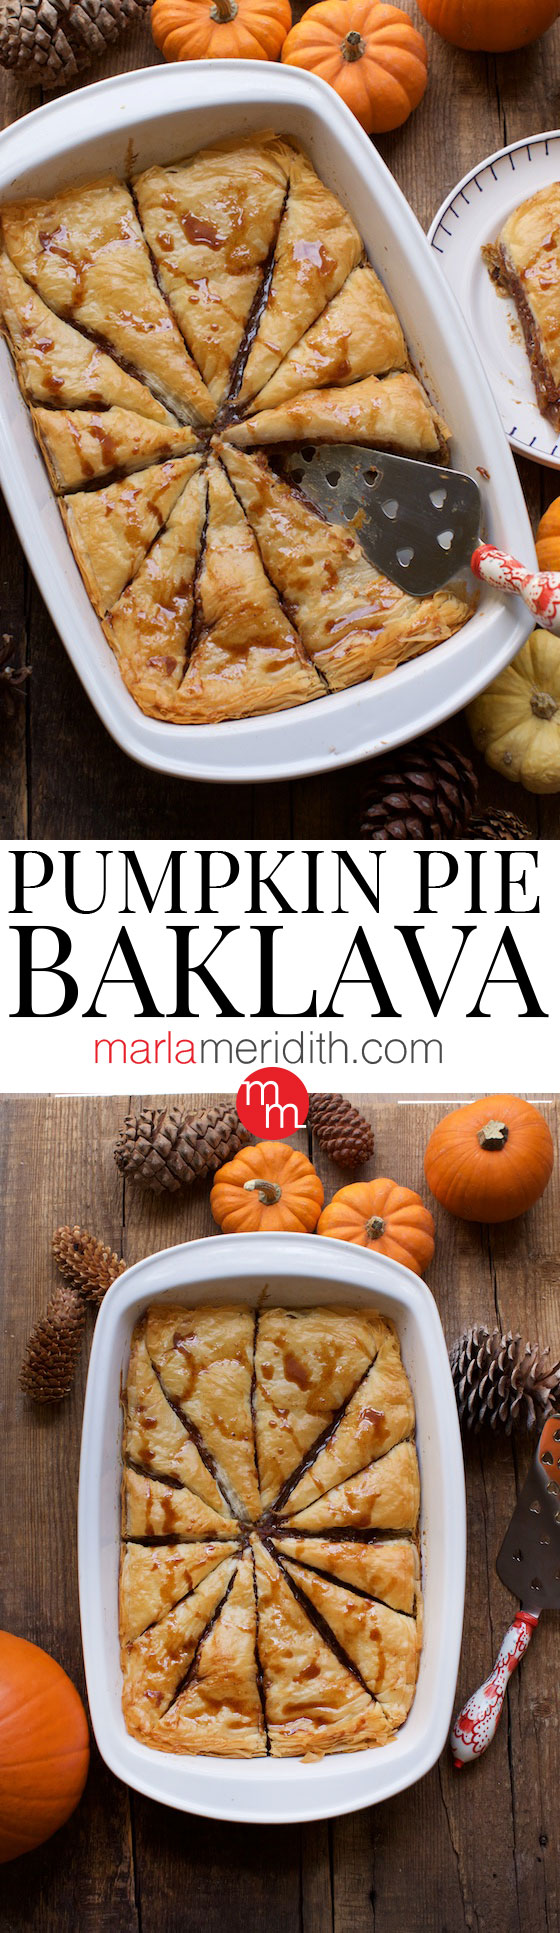 Pumpkin Pie Baklava recipe. A delicious holiday dessert! MarlaMeridith.com #recipe #pumpkin #thanksgiving